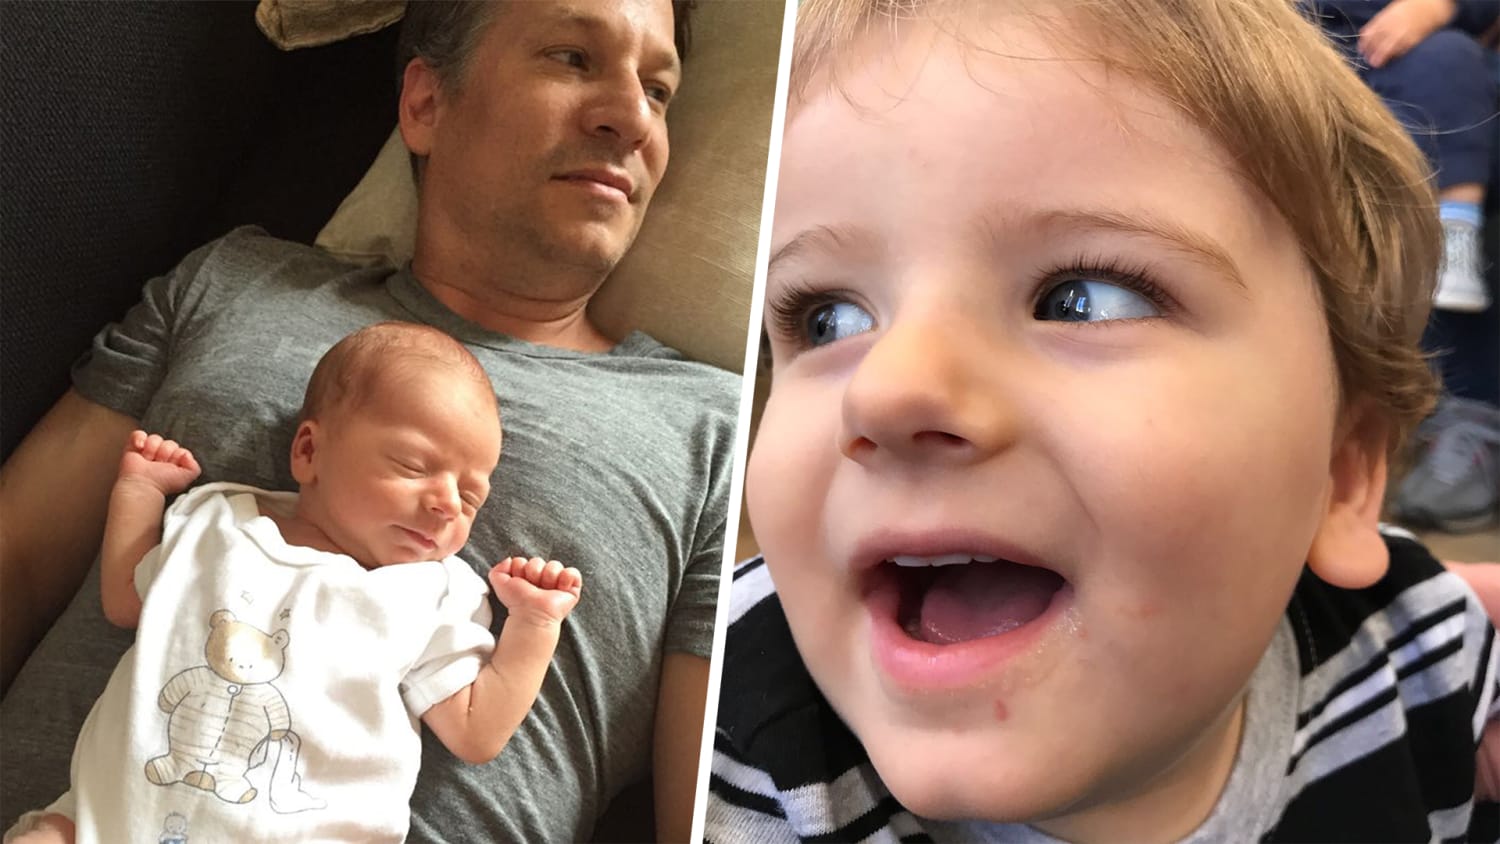 zoogdier Zegevieren zeil Rett syndrome: Richard Engel shares his son's rare condition